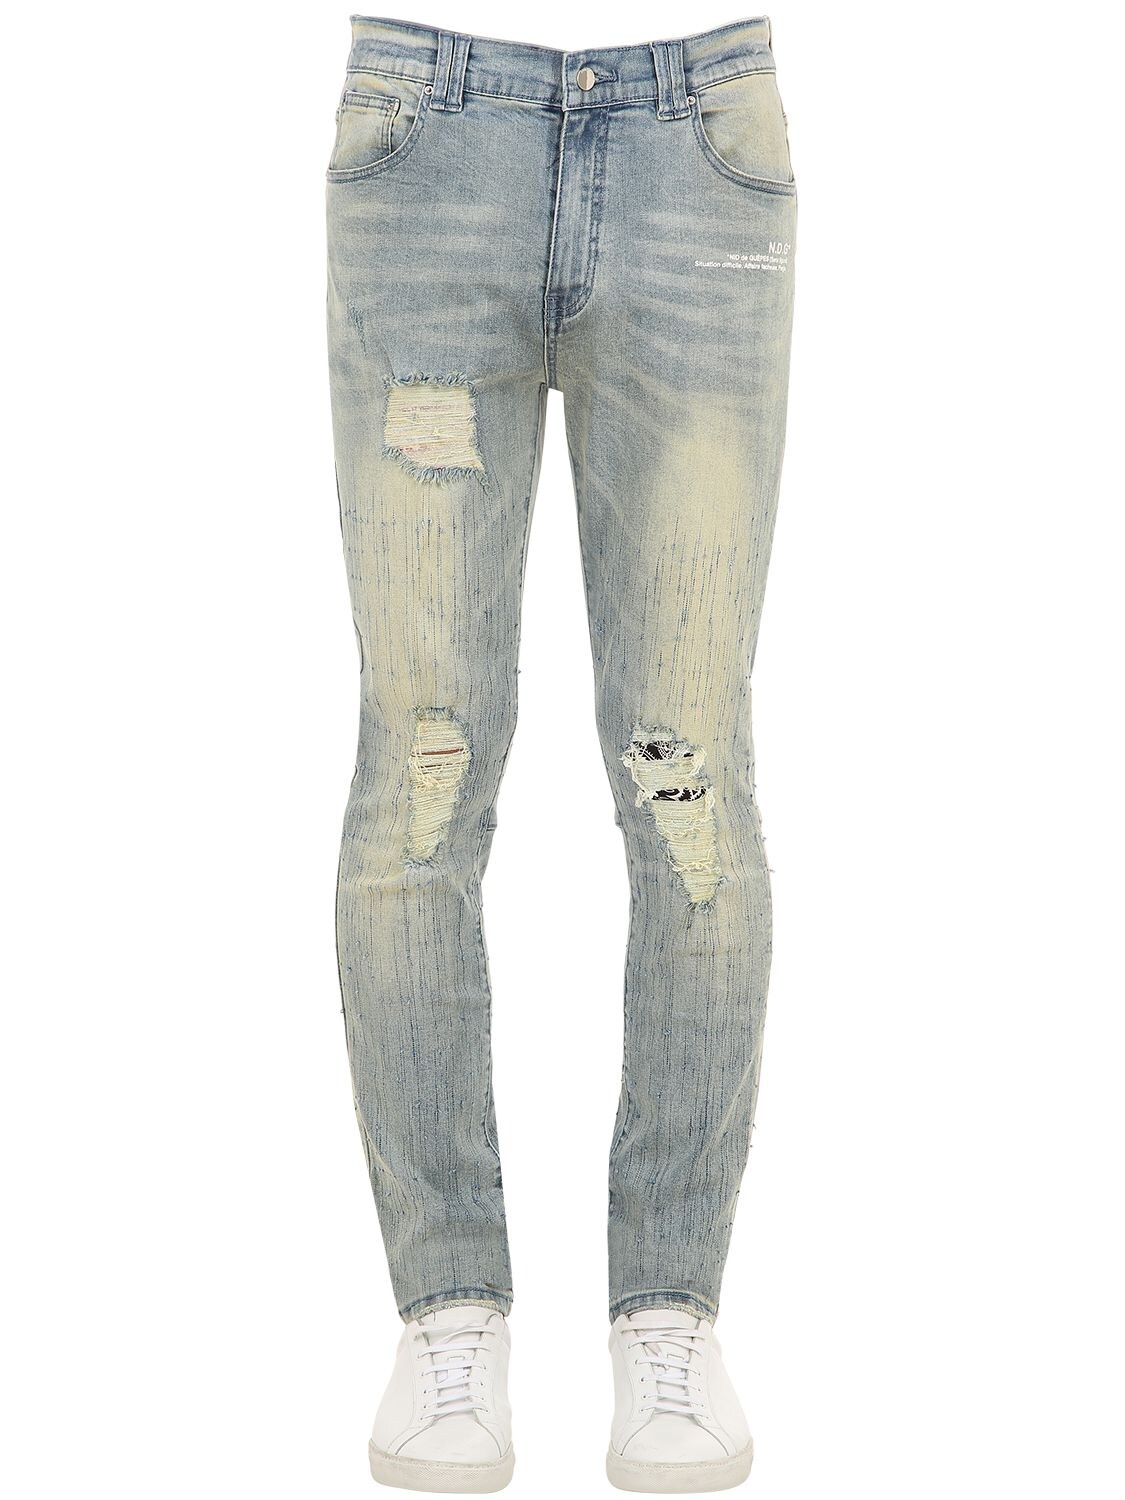 ndg jeans price